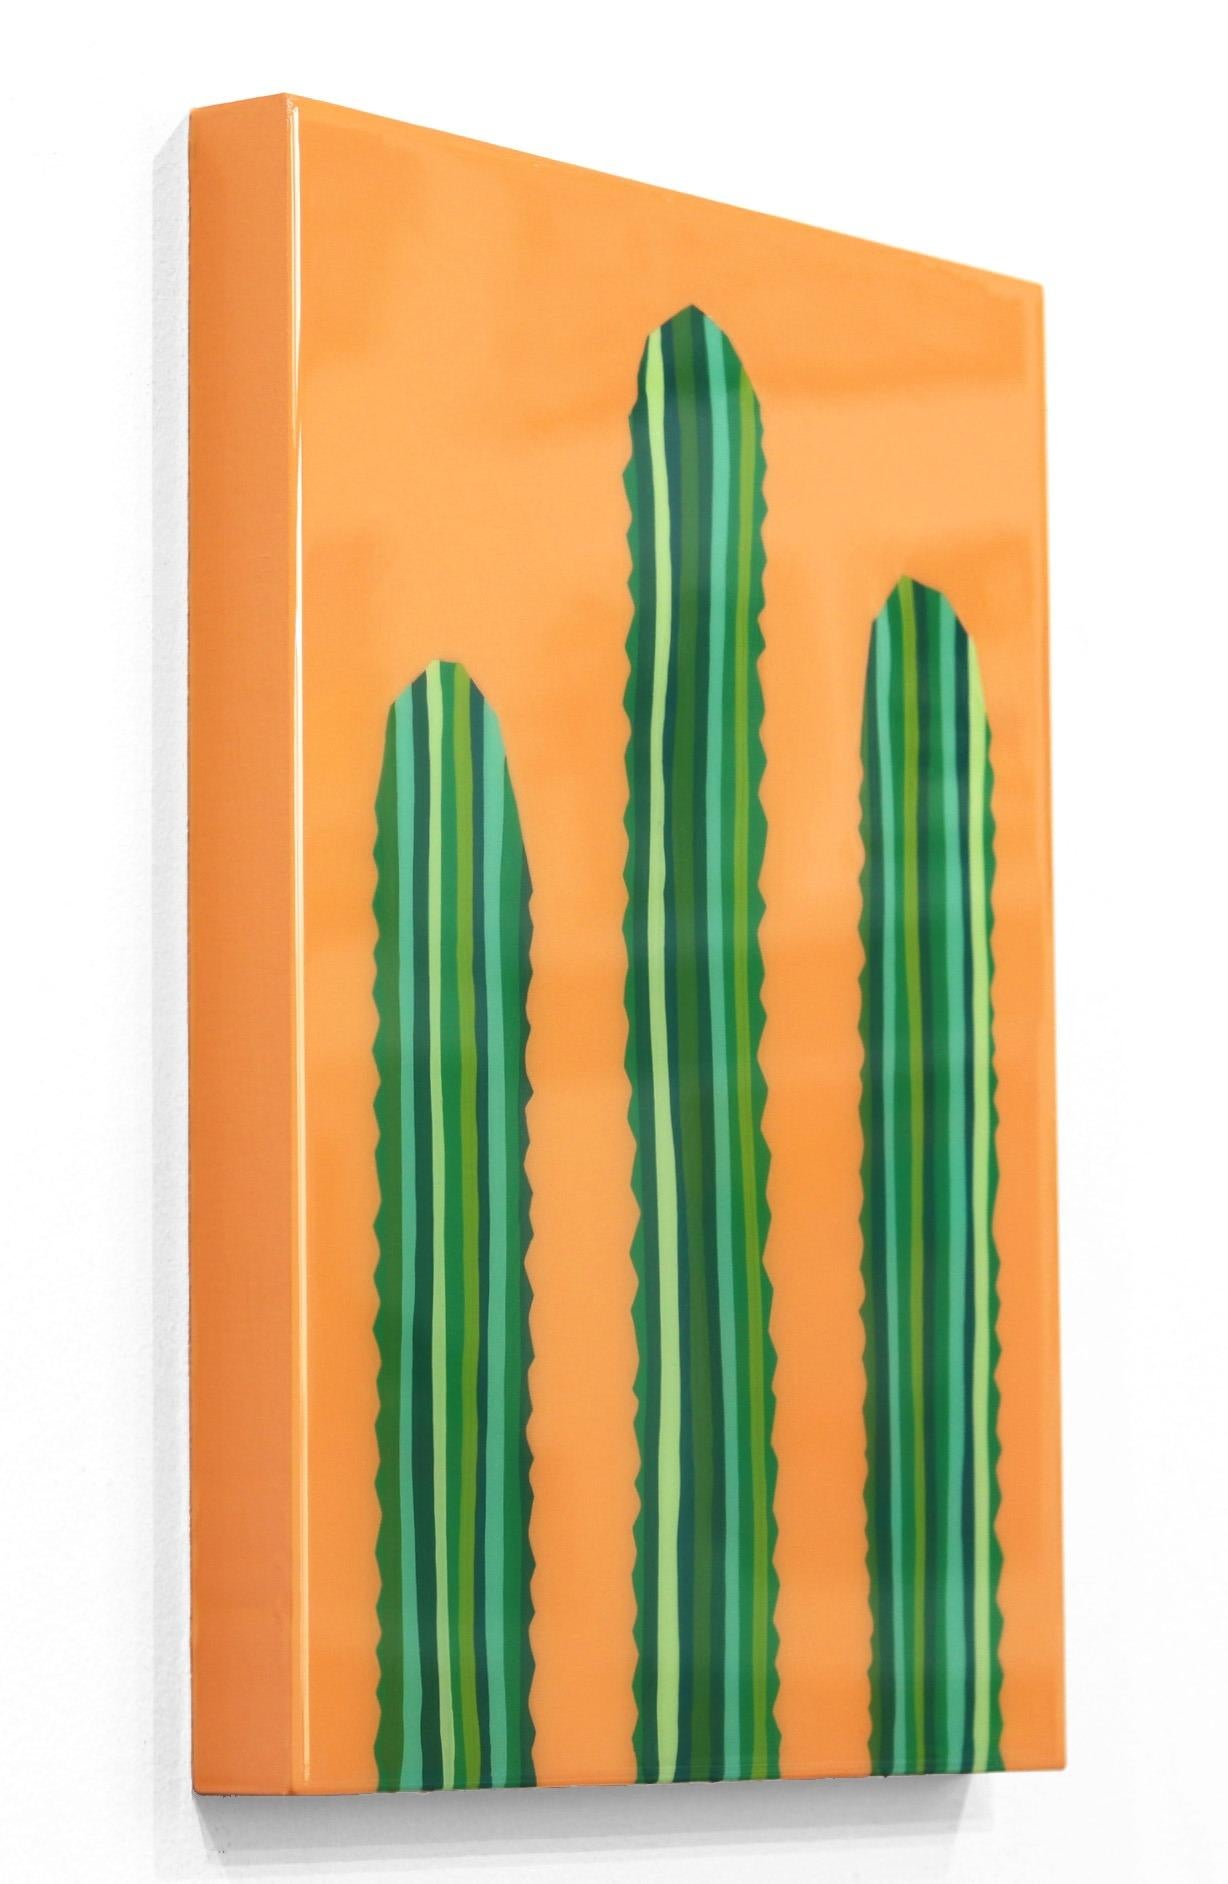 Velloso - Vibrant Orange Green Southwest Inspired Pop Art Cactus Painting For Sale 1